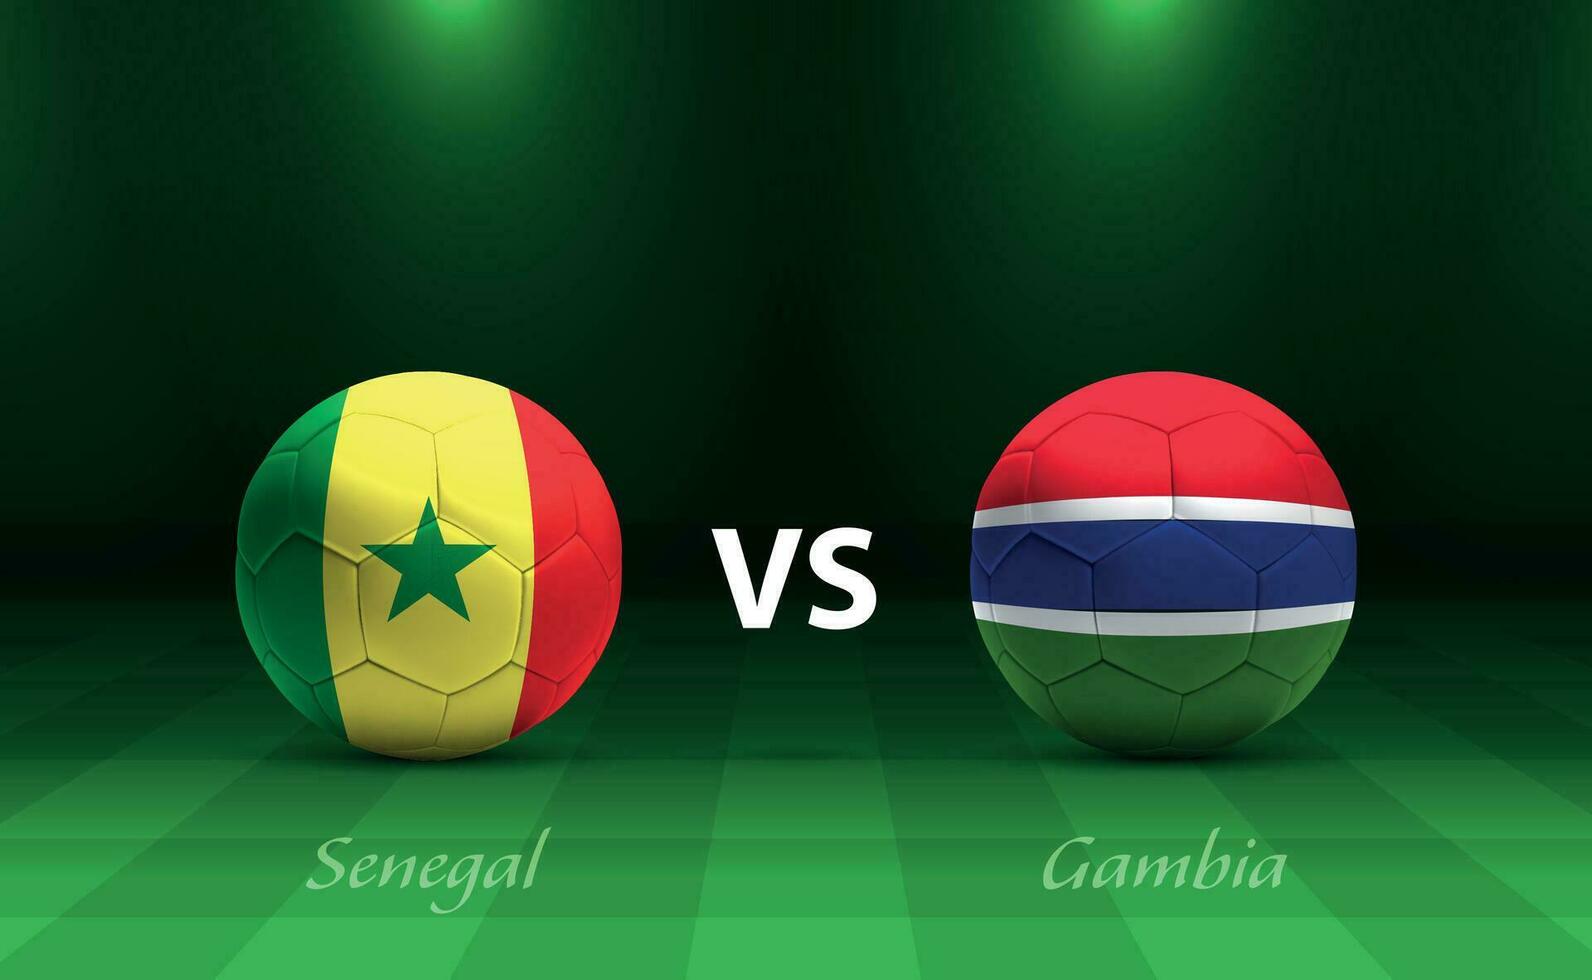 Senegal vs Gambia Amerikaans voetbal scorebord uitzending sjabloon vector